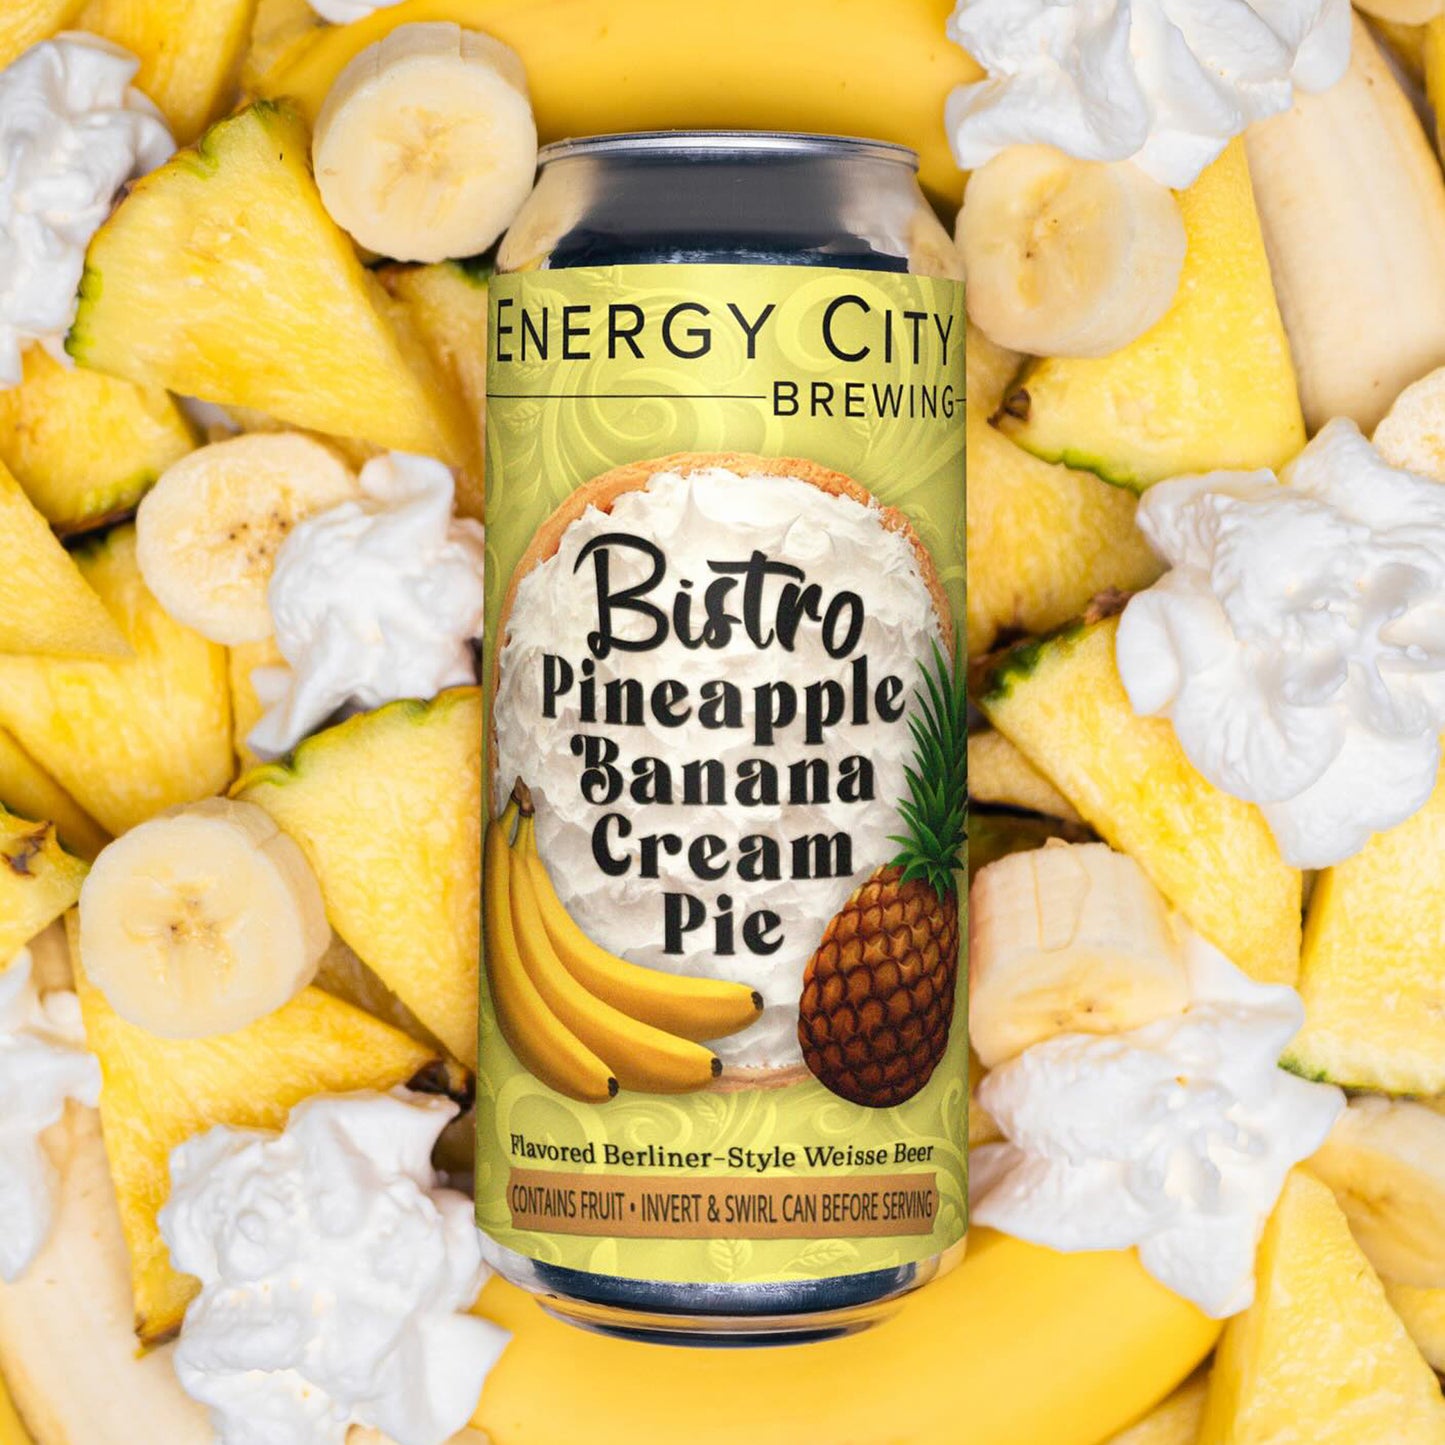 Bistro [Pineapple Banana Cream Pie] [Pre-Order]